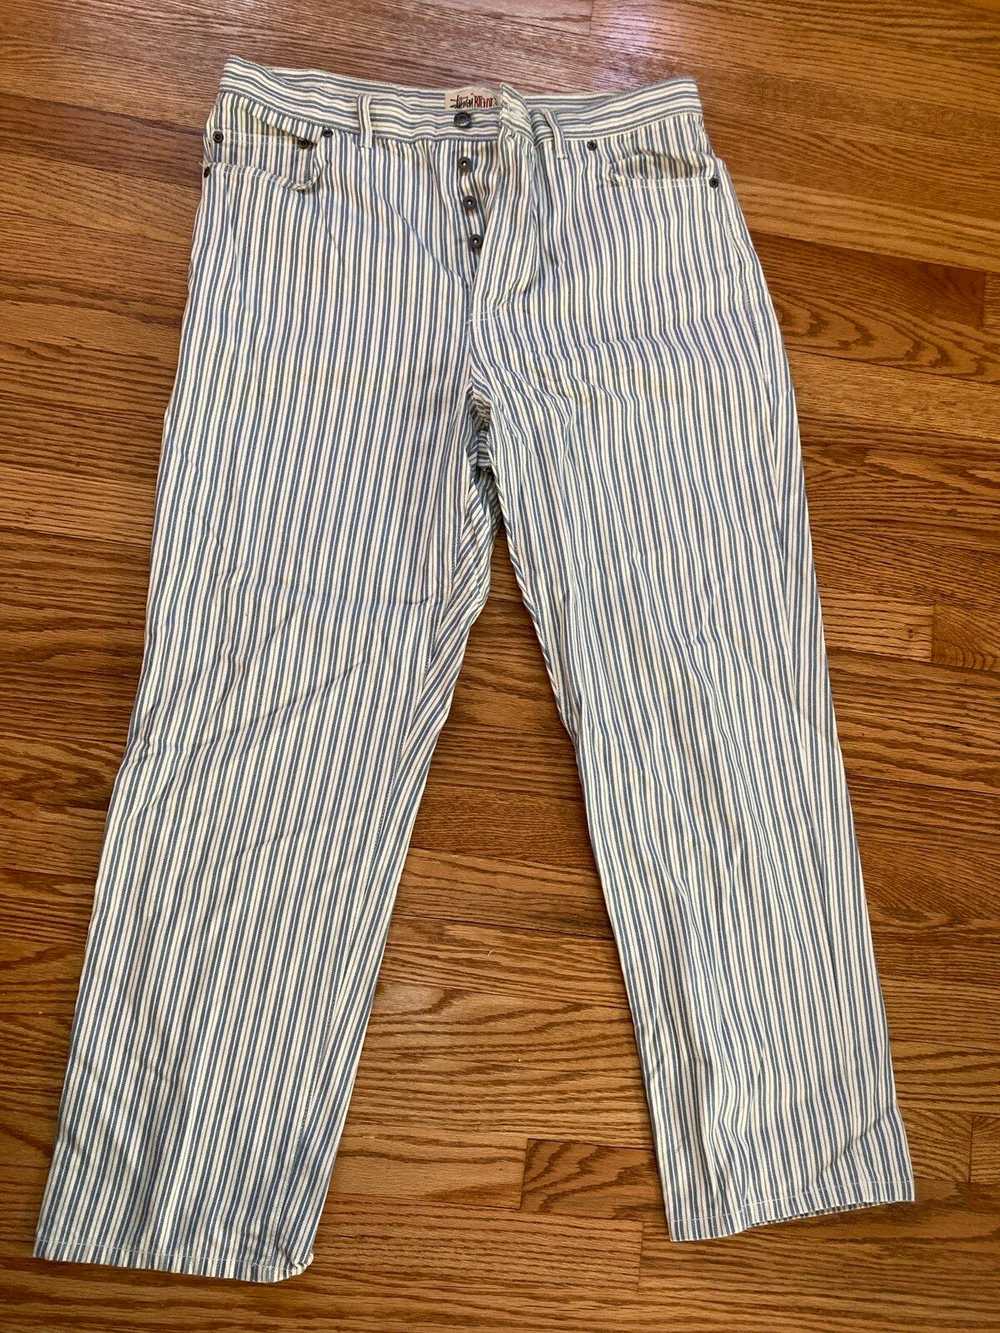 Stussy Stussy Big Ol’ Jeans Railroad Stripe Jeans - image 1